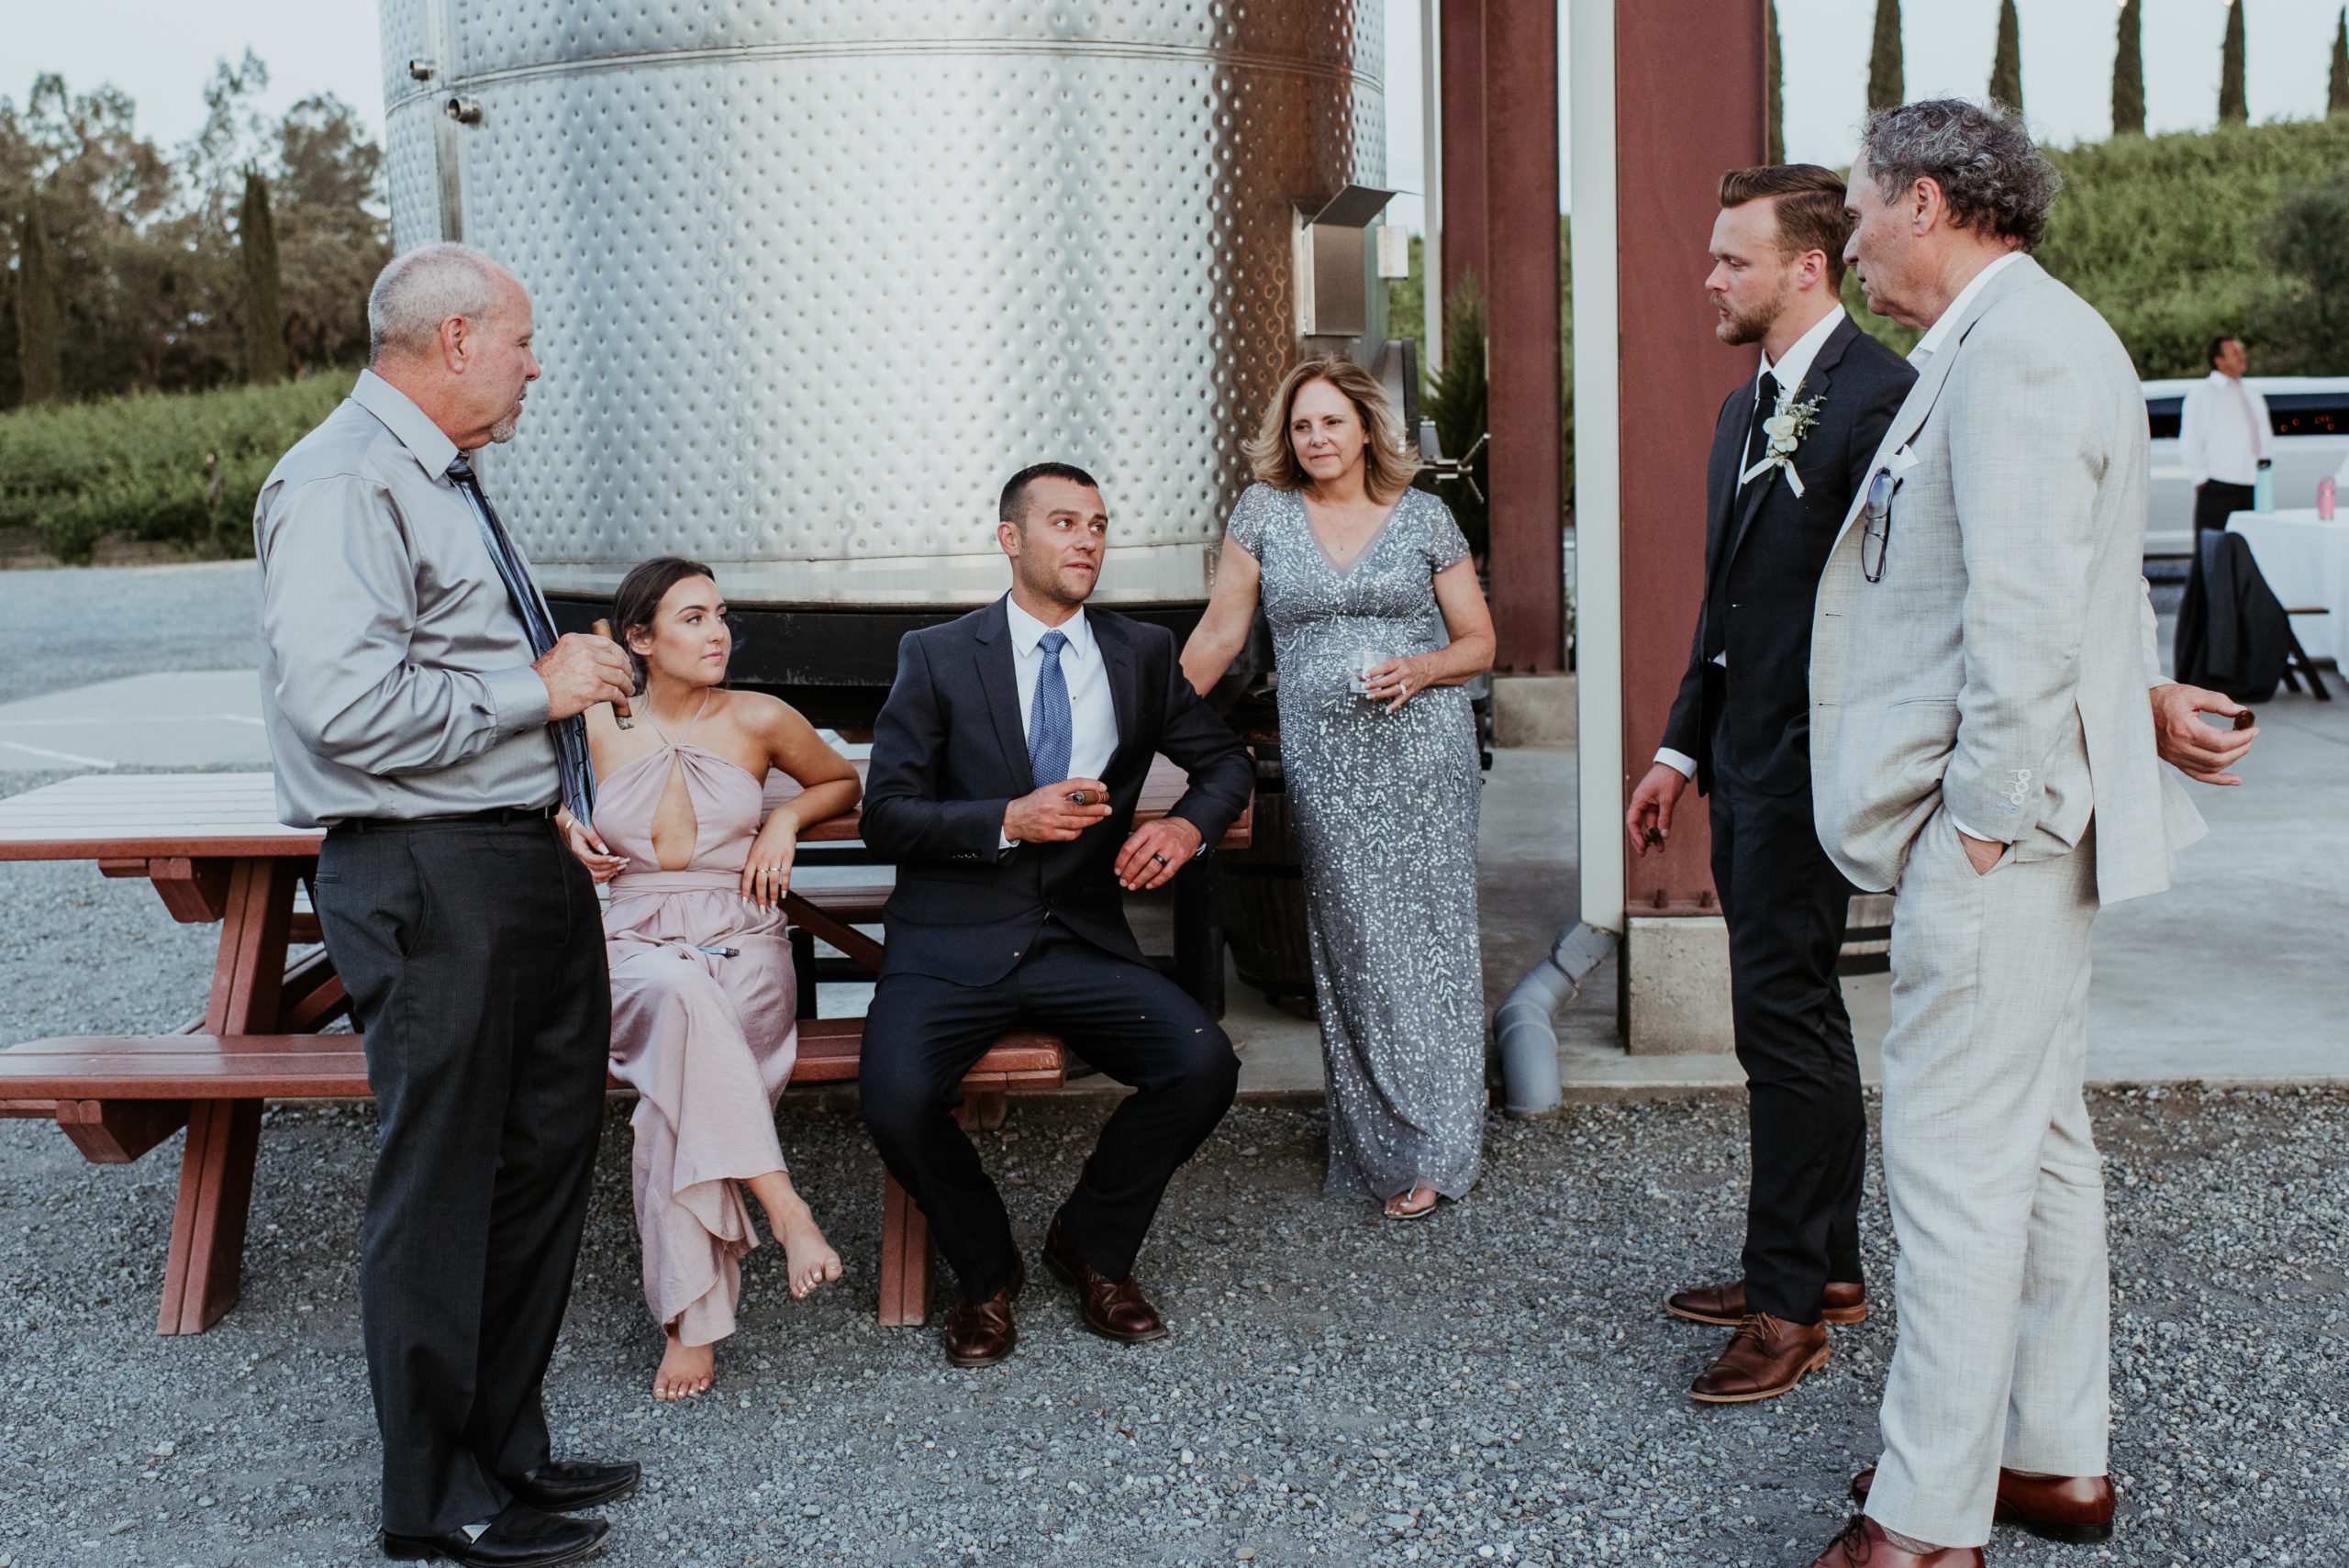 Guests at winery wedding